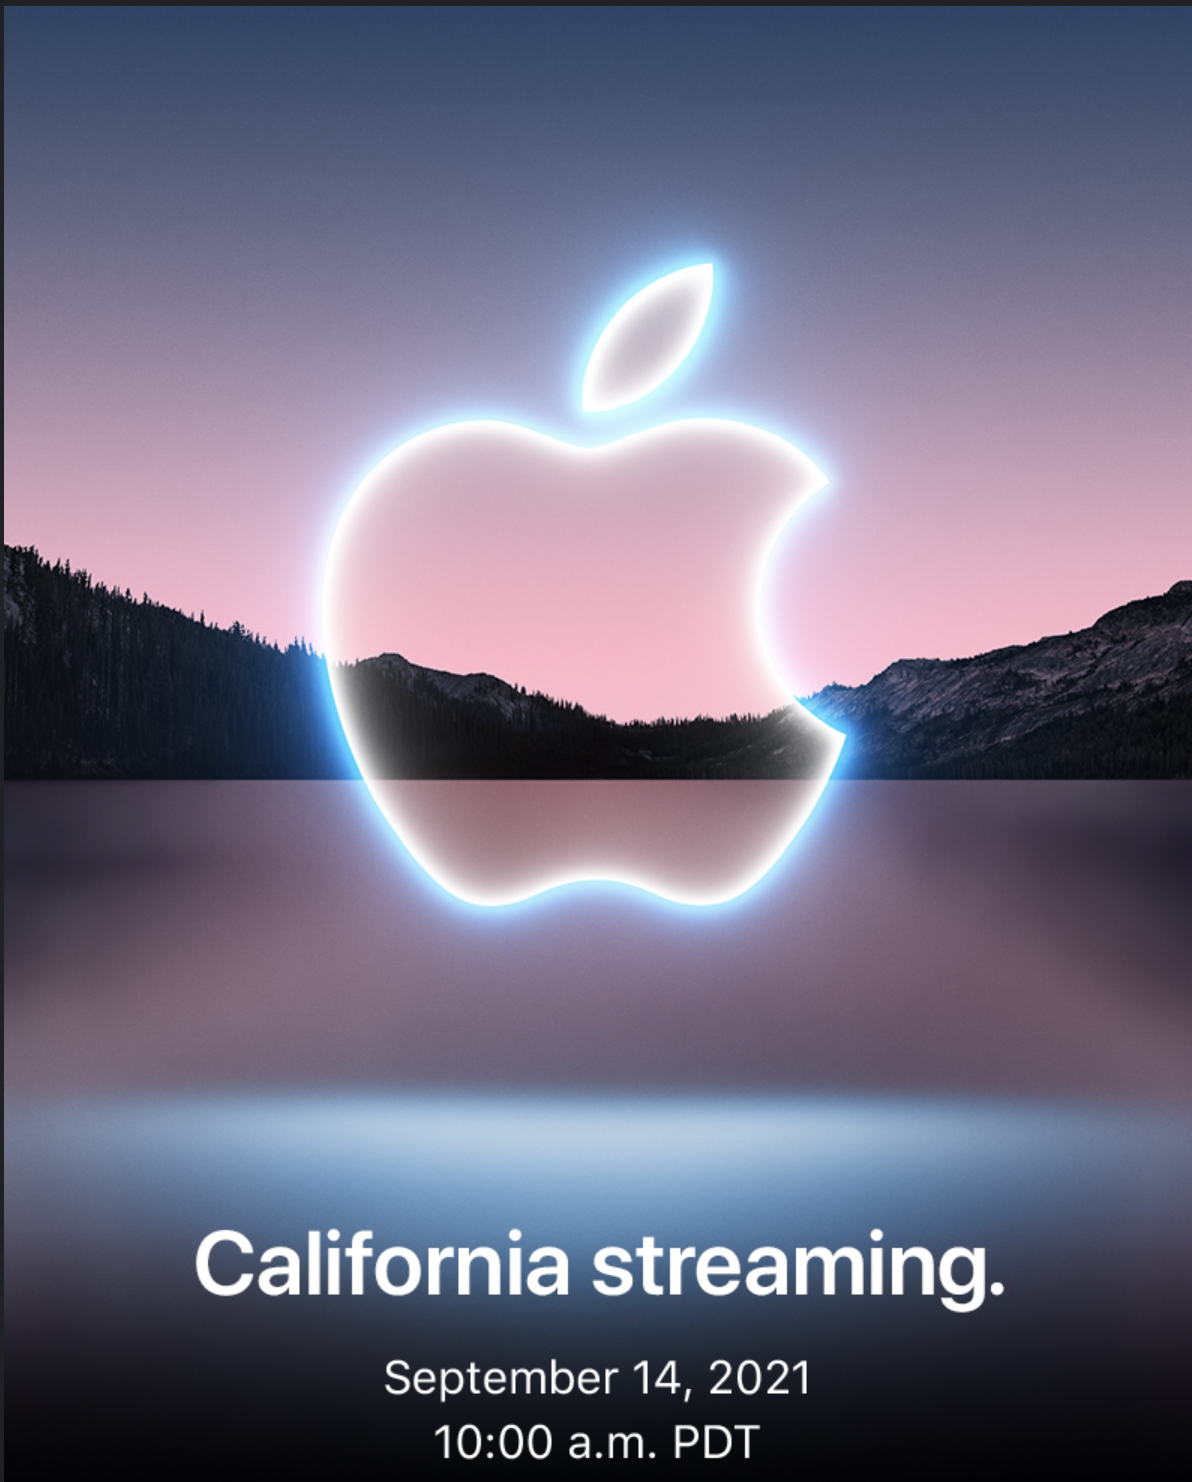 California Streaming